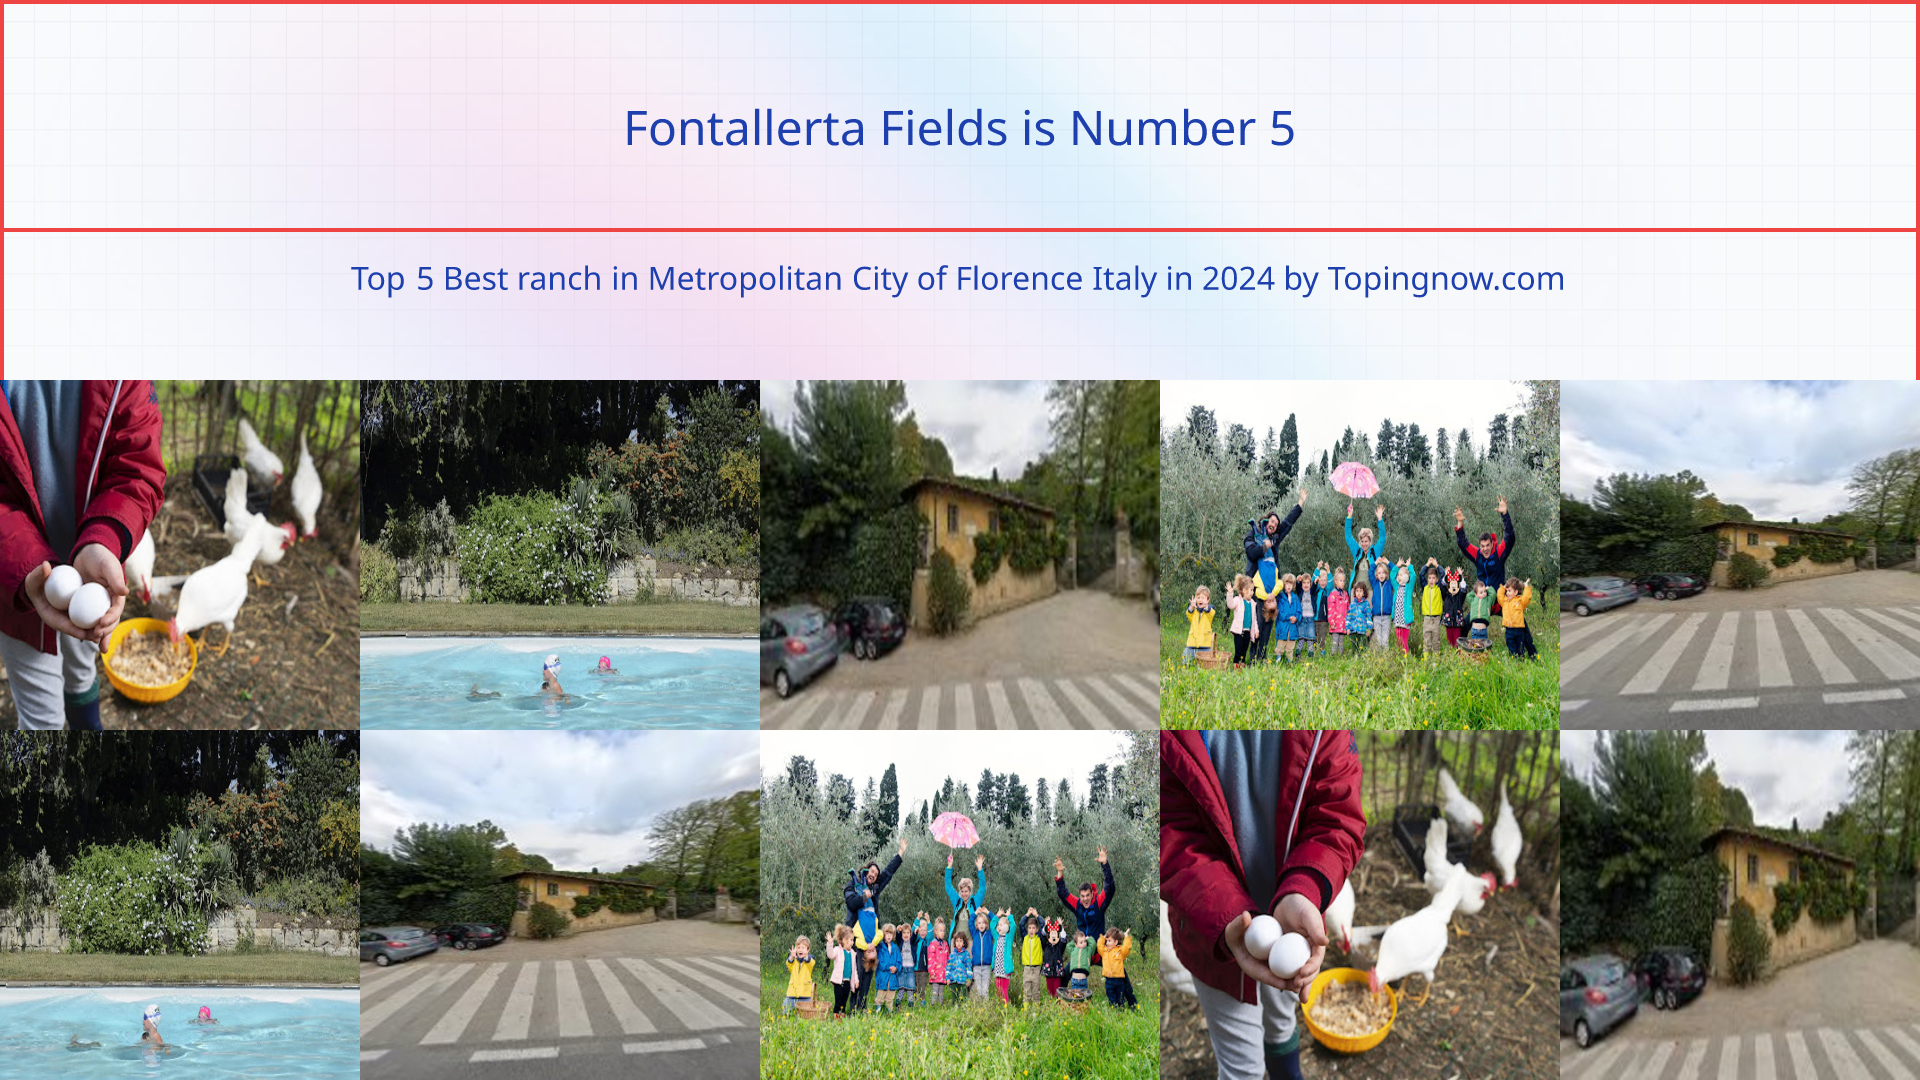 Fontallerta Fields: Top 5 Best ranch in Metropolitan City of Florence Italy in 2024